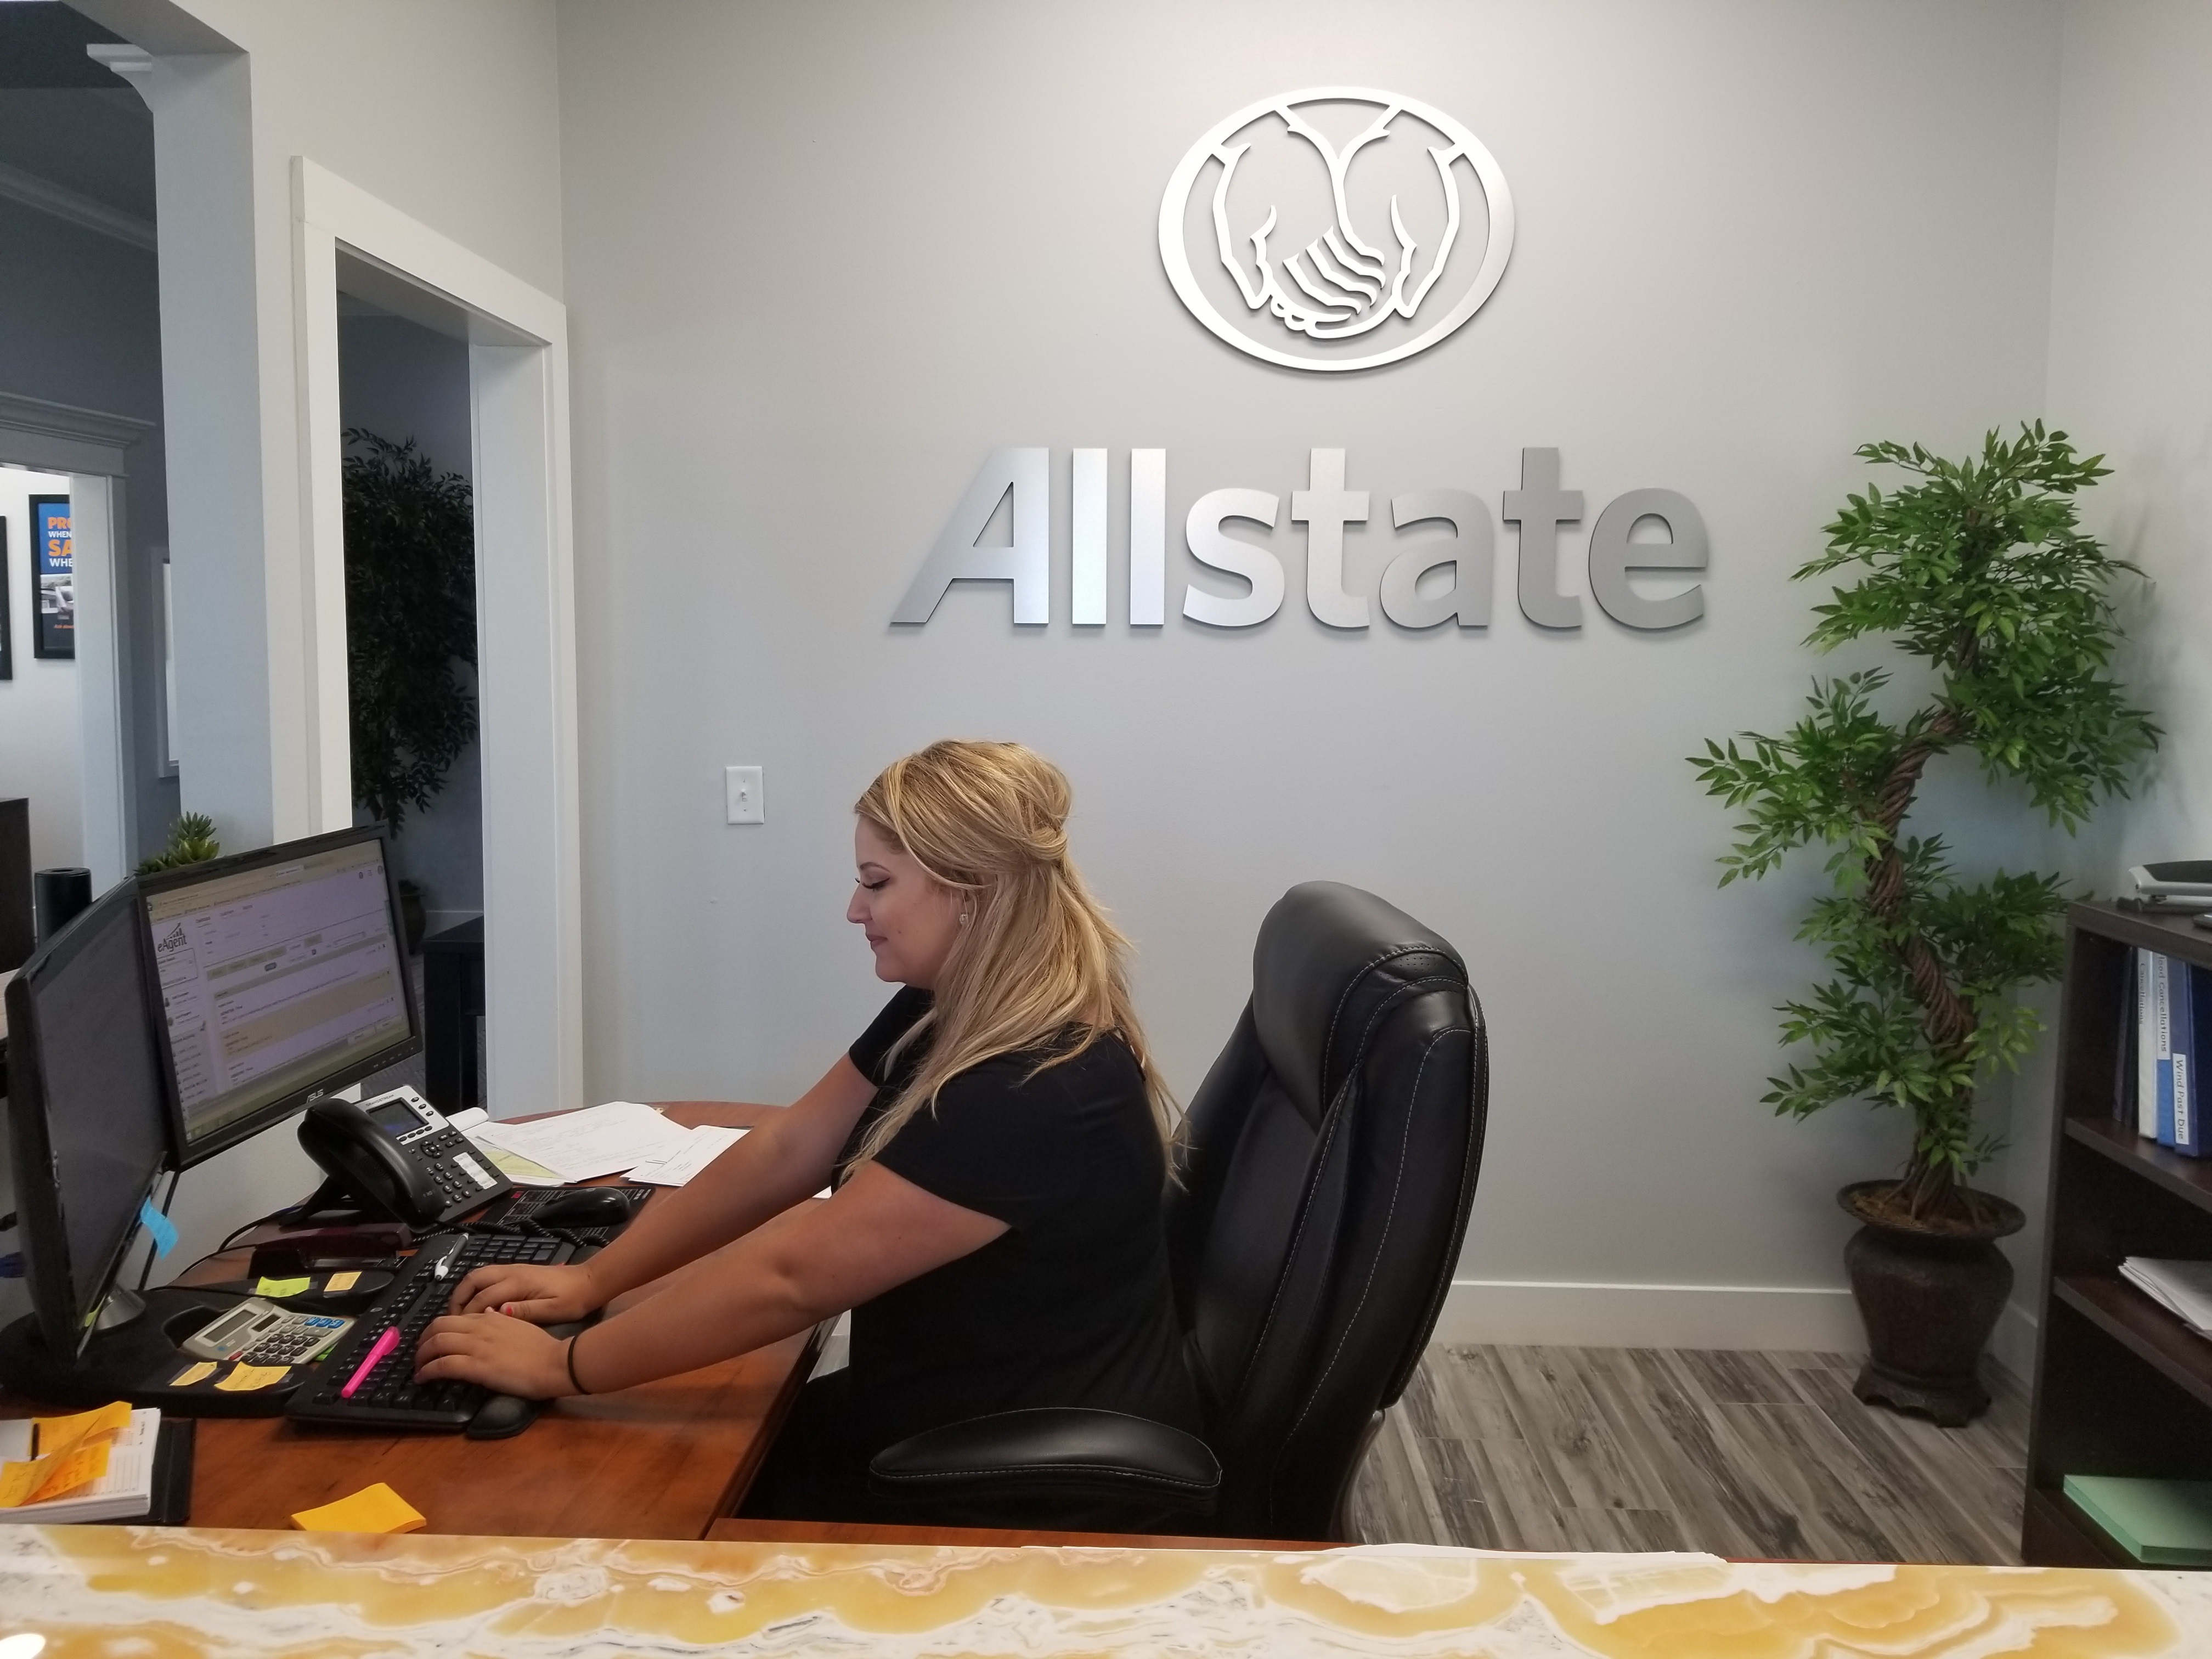 Chris Sapp: Allstate Insurance Photo